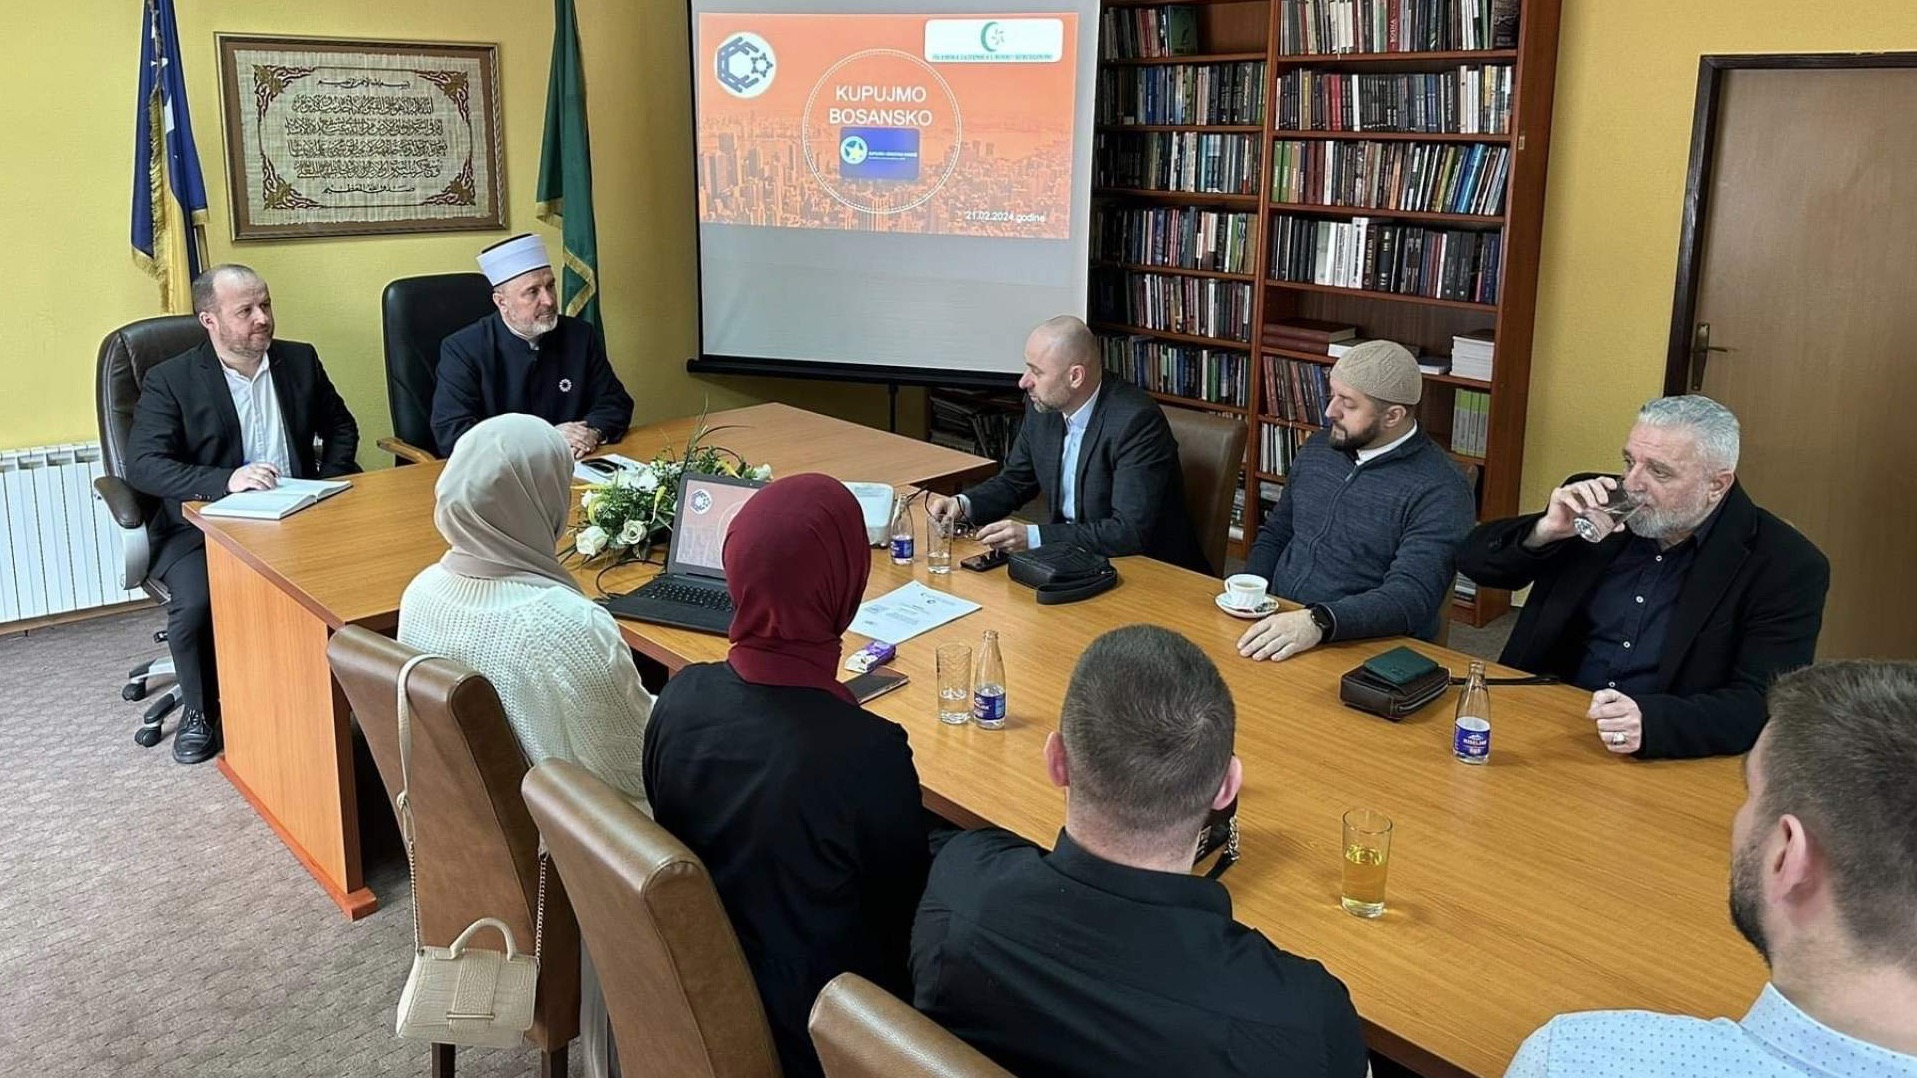 Muftija travnički i premijer Vlade SBK podržali projekat "Kupujmo bosansko"